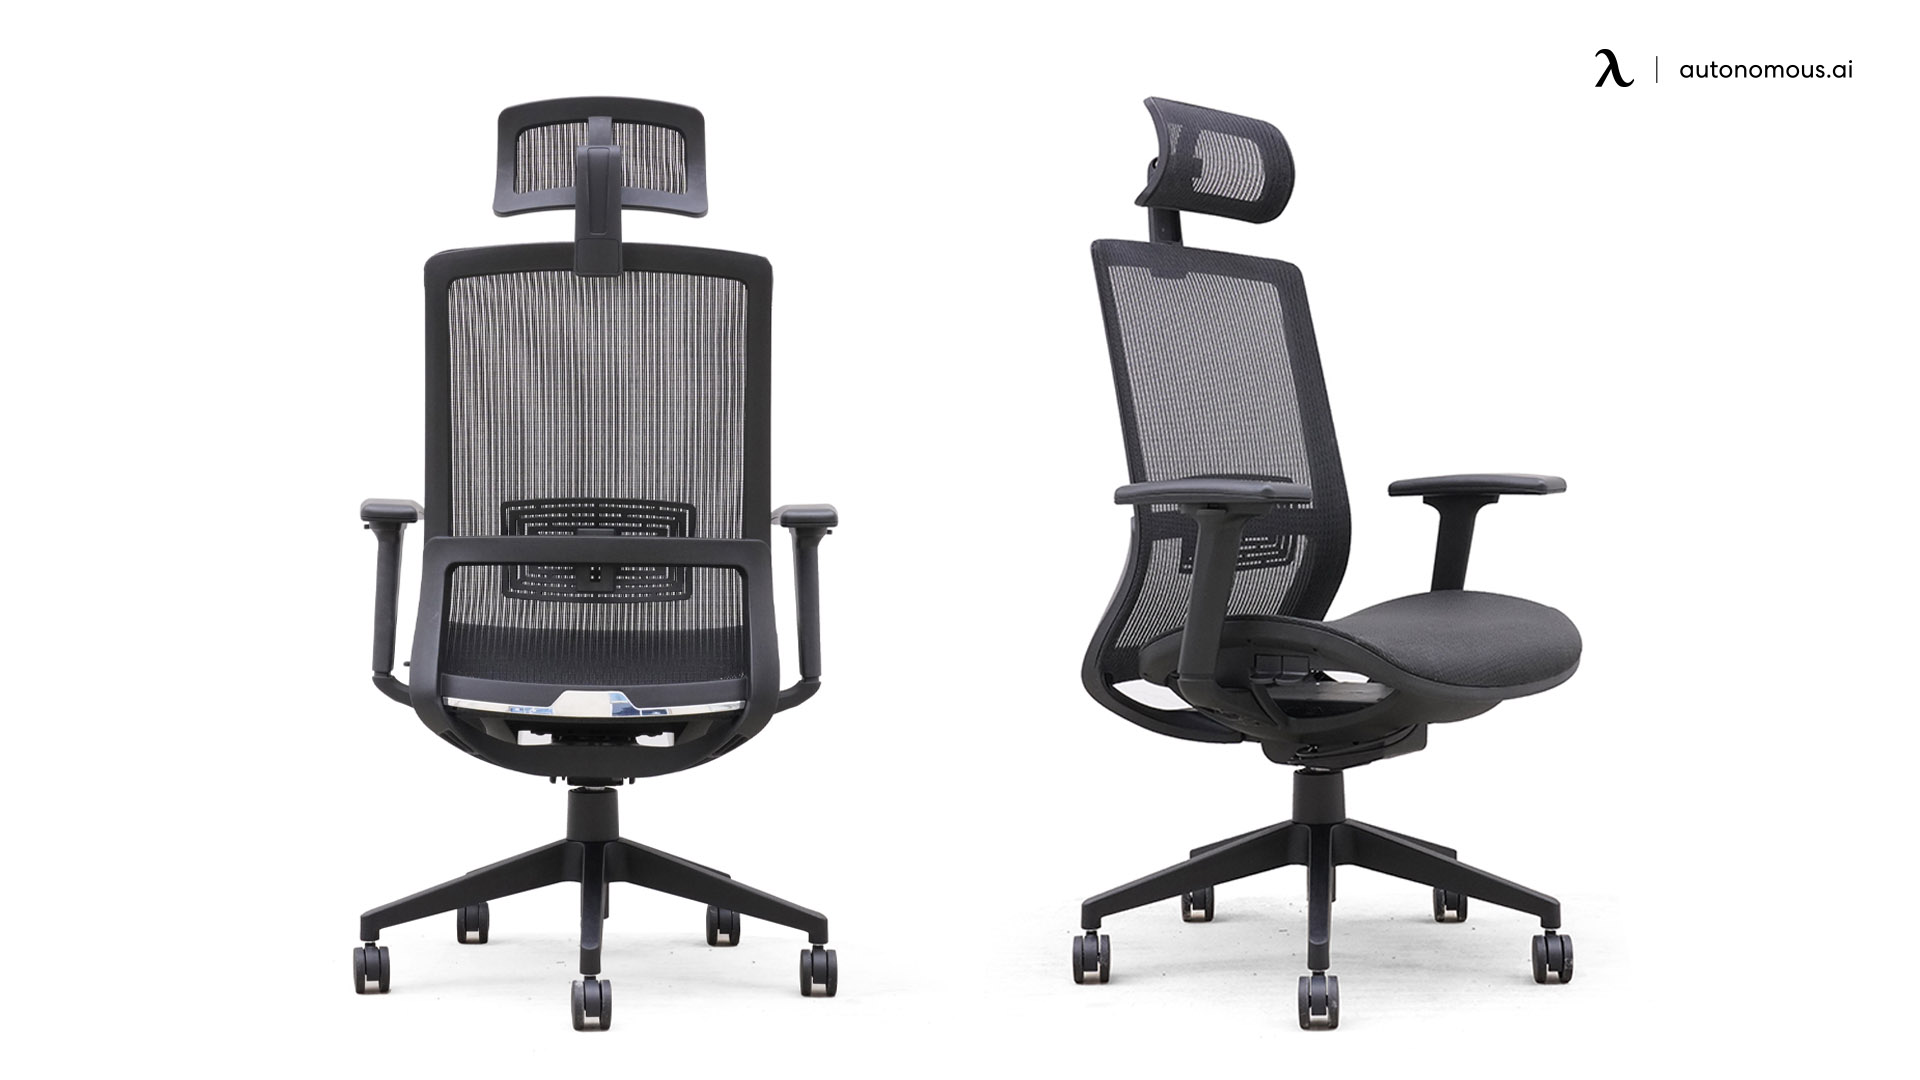 Boss Mesh Chair “The Breeze” with Headrest